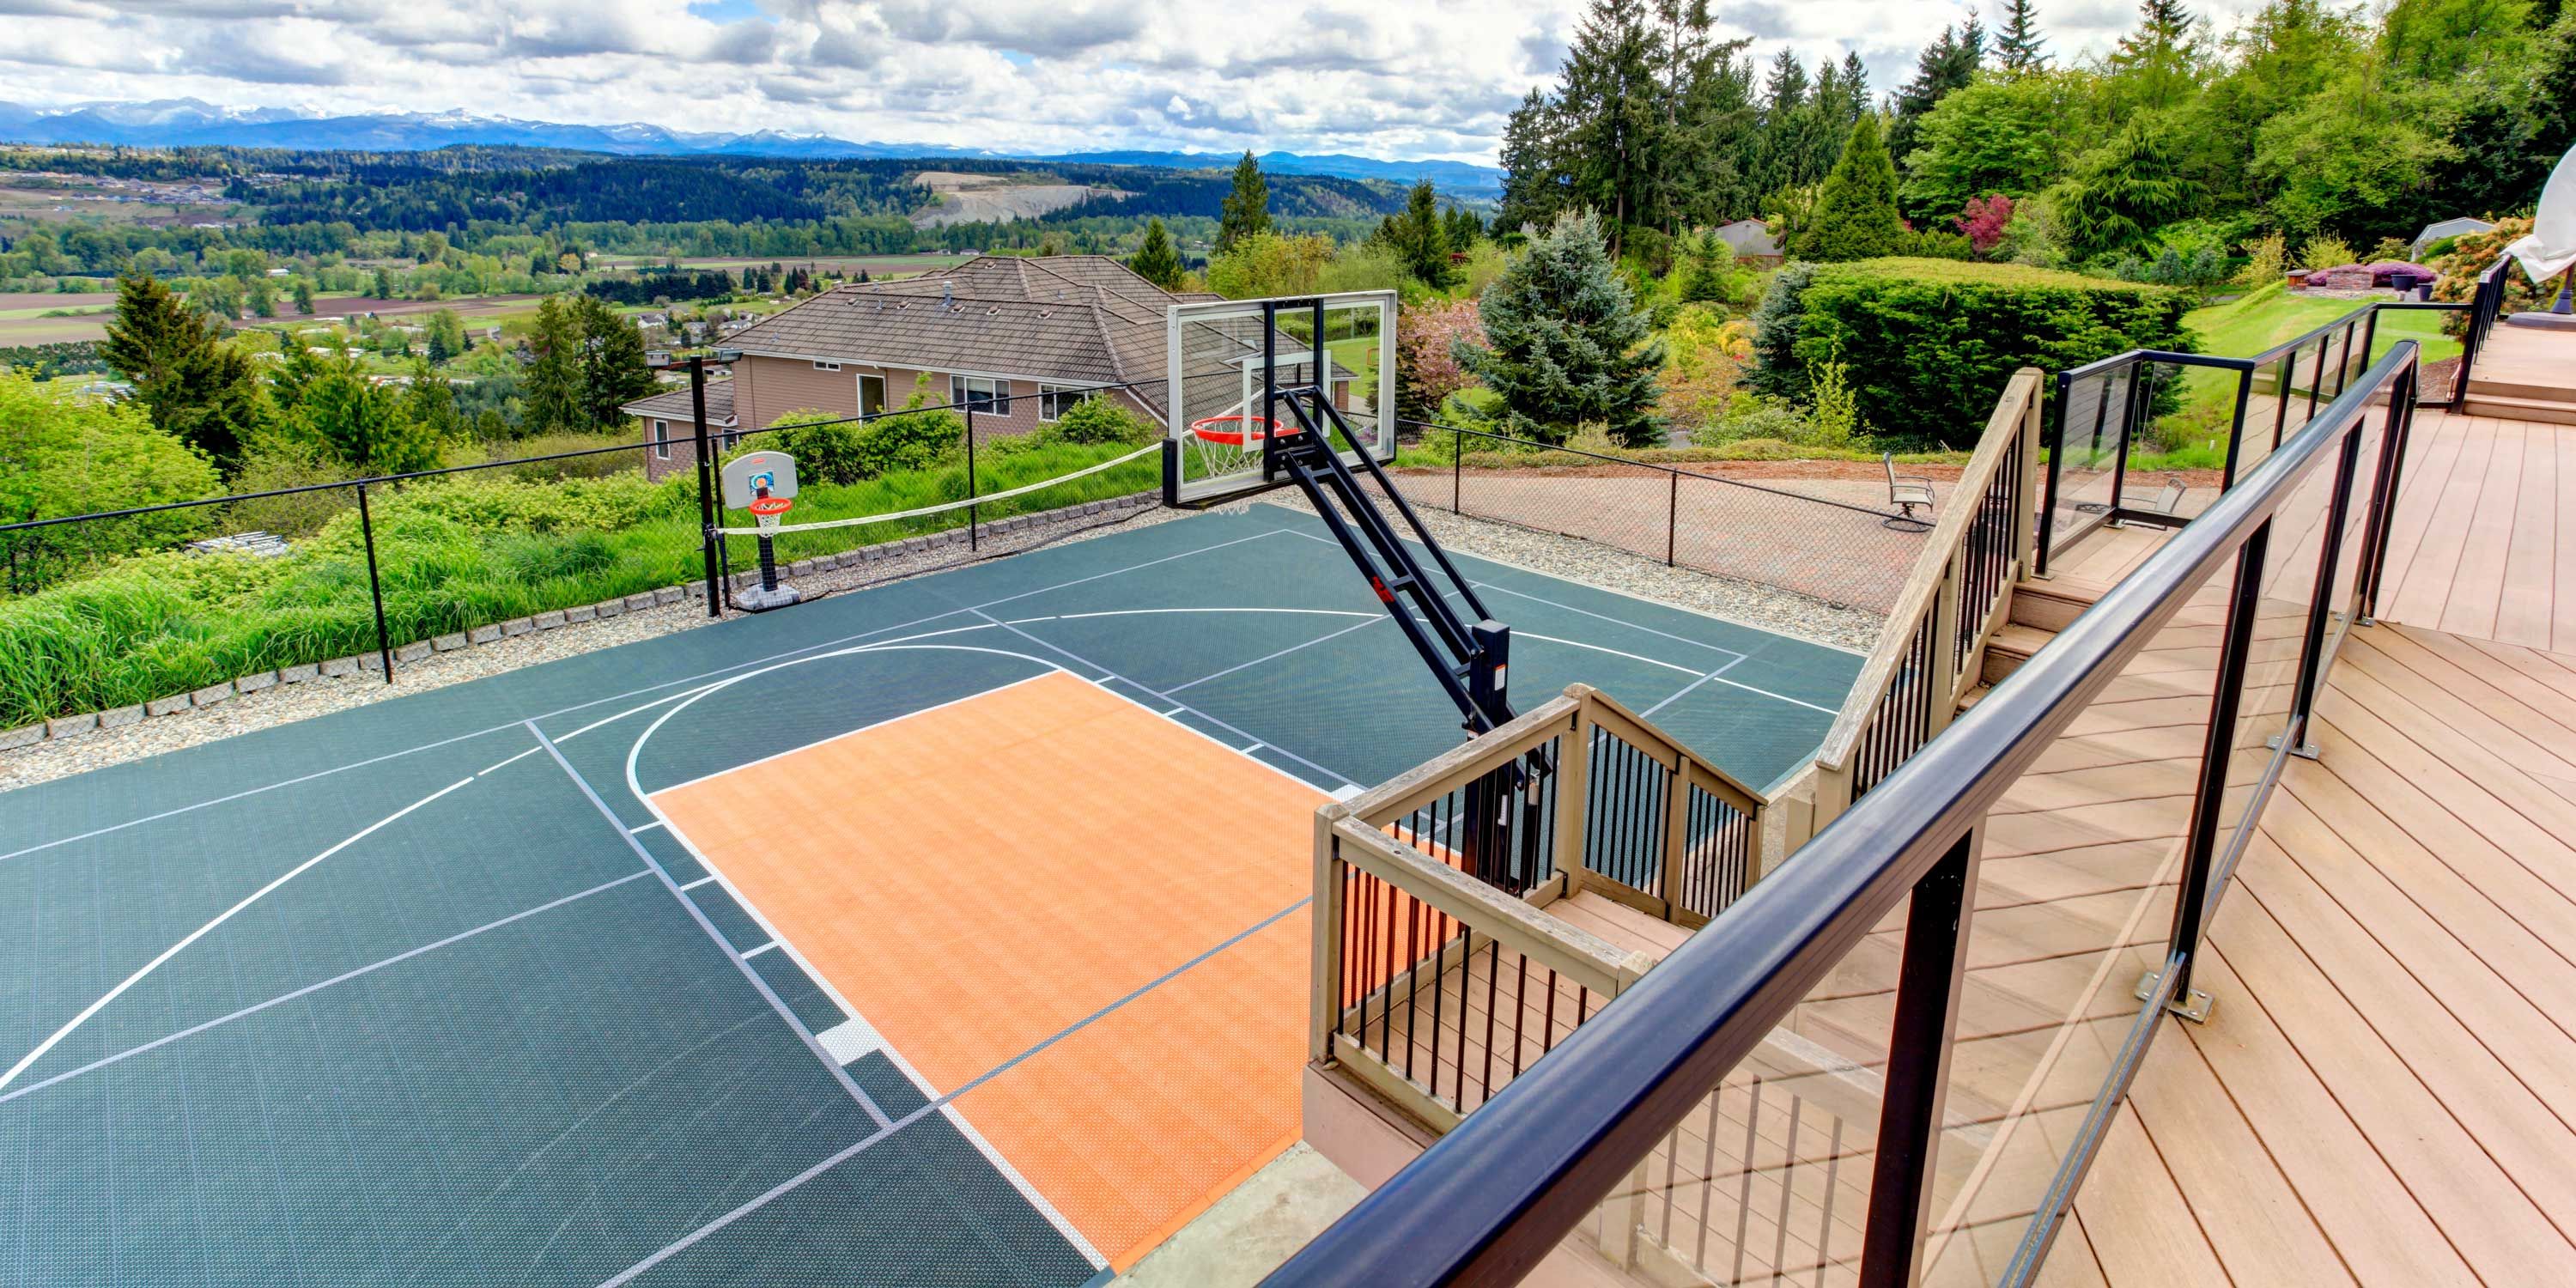 Backyard, basketball court, mountains, trees